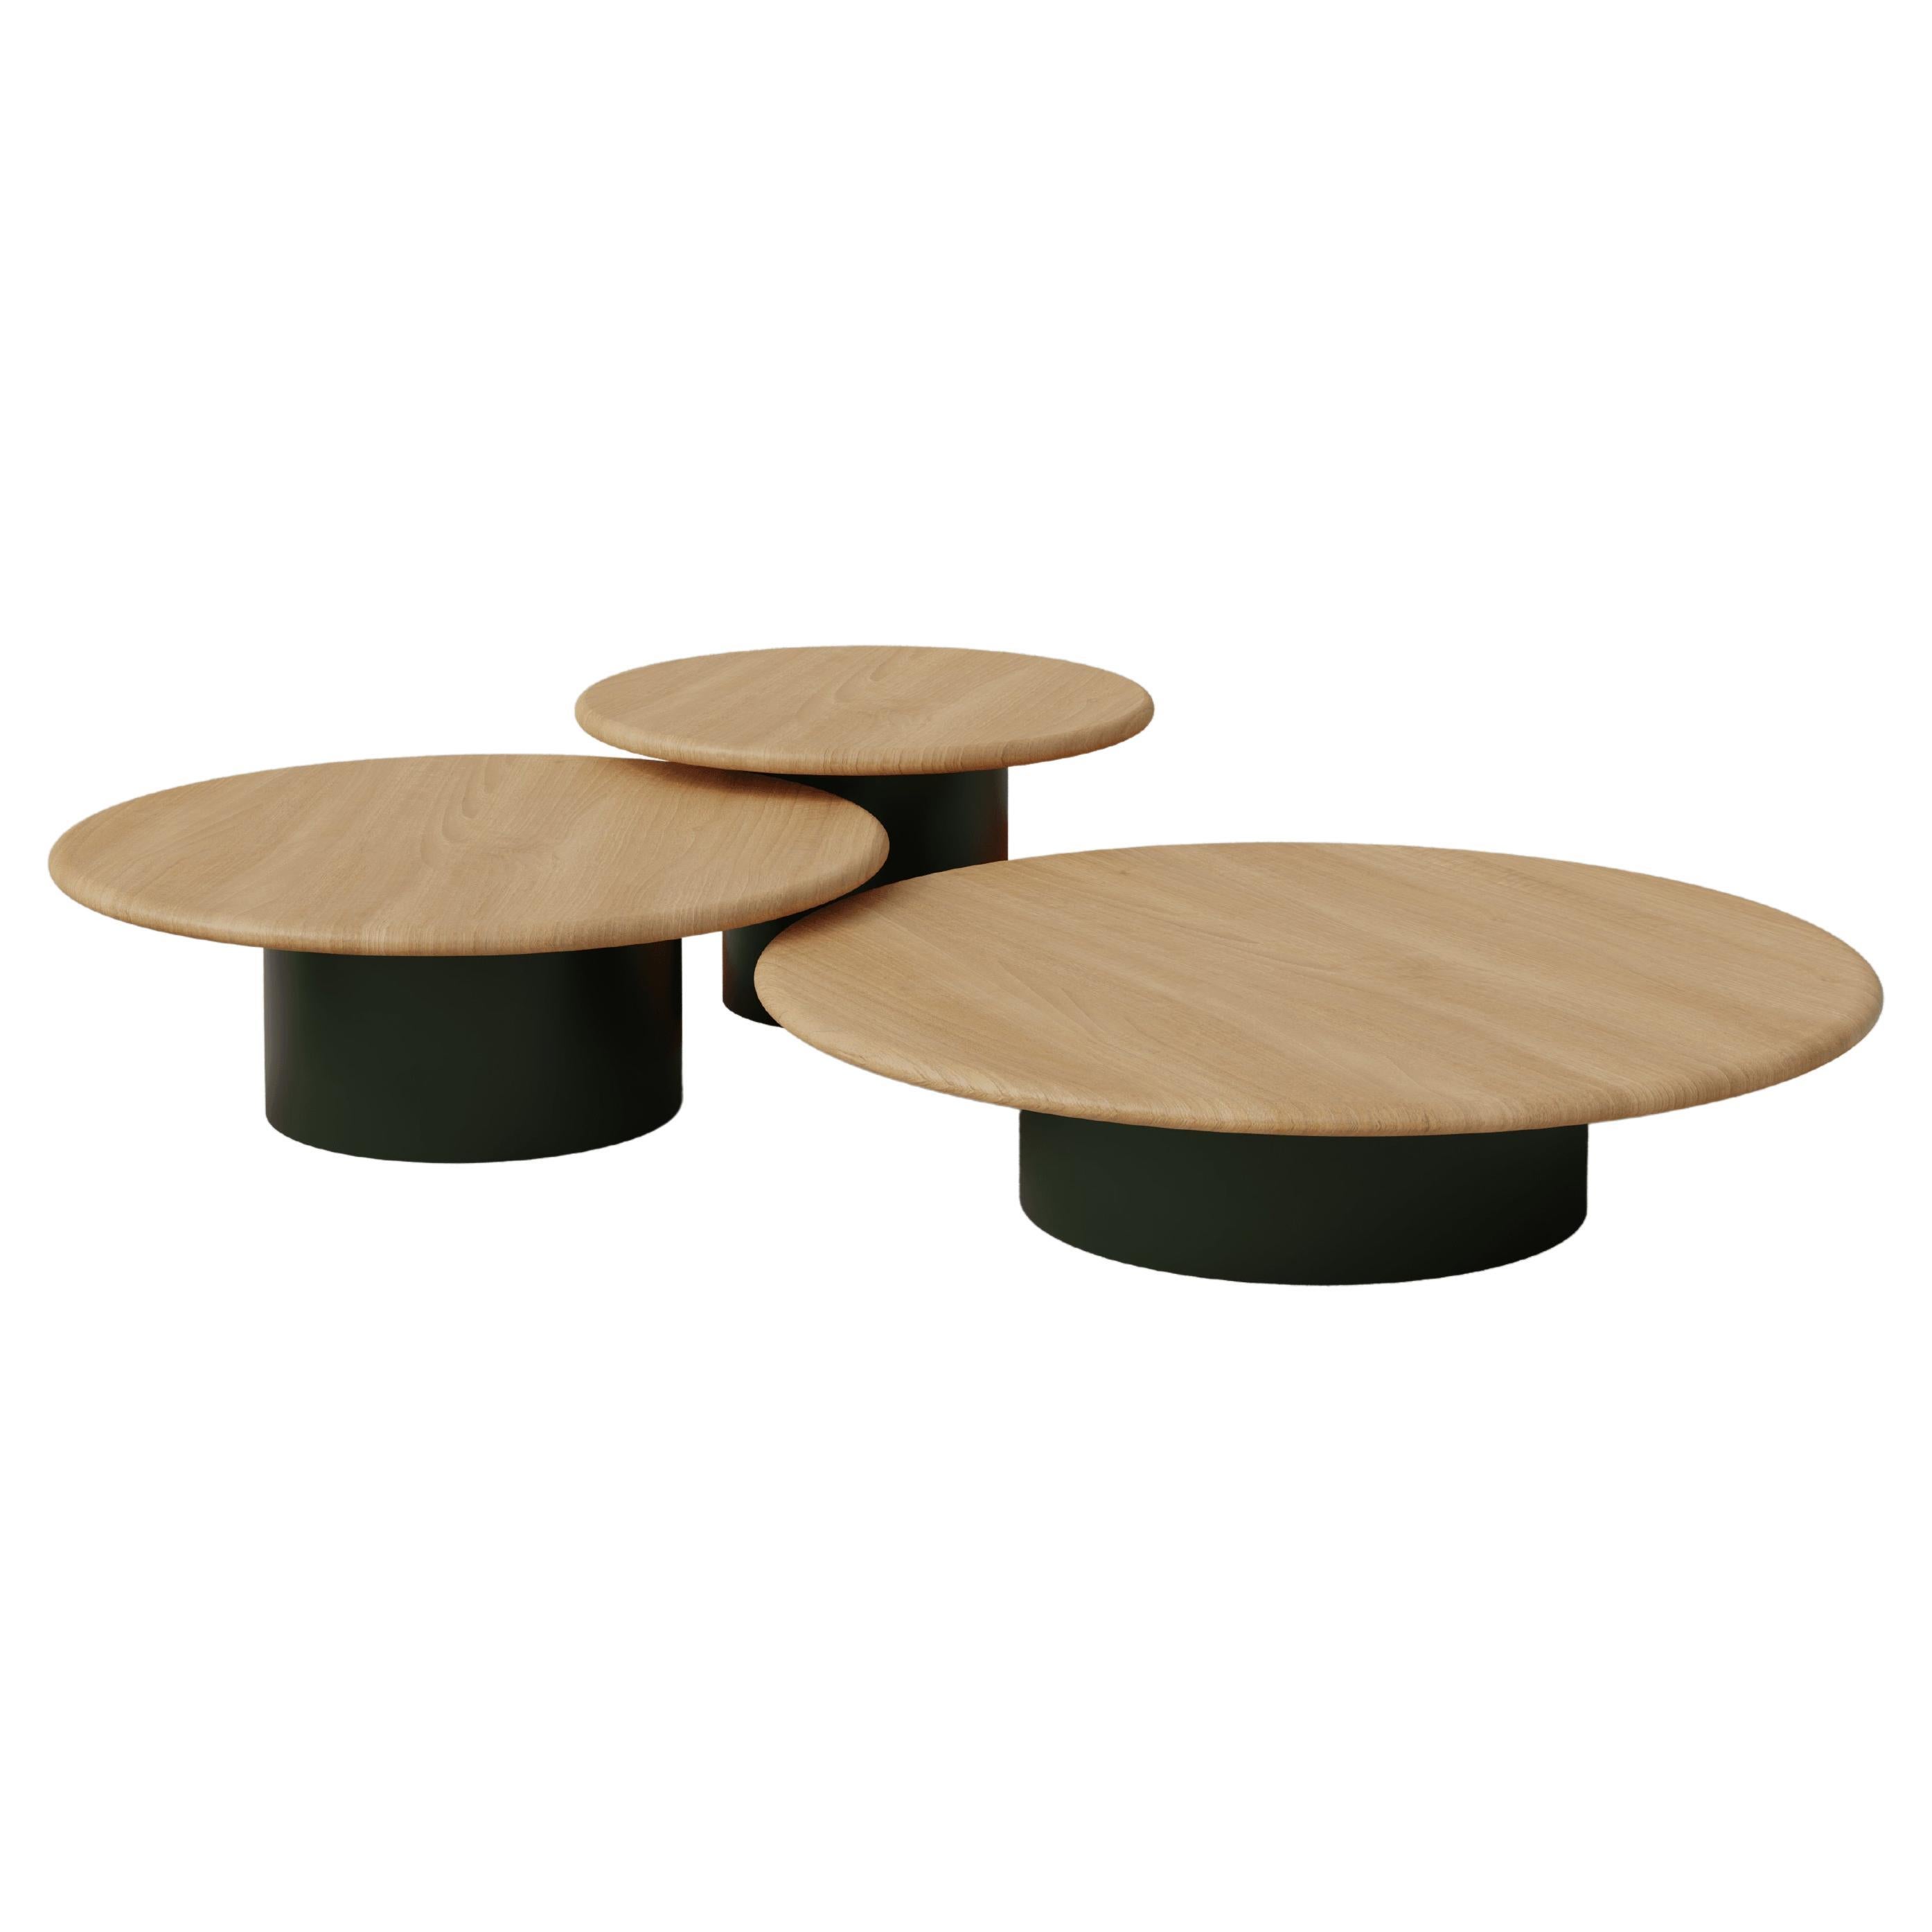 Raindrop Coffee Table Set, 600, 800, 1000, Oak / Moss Green